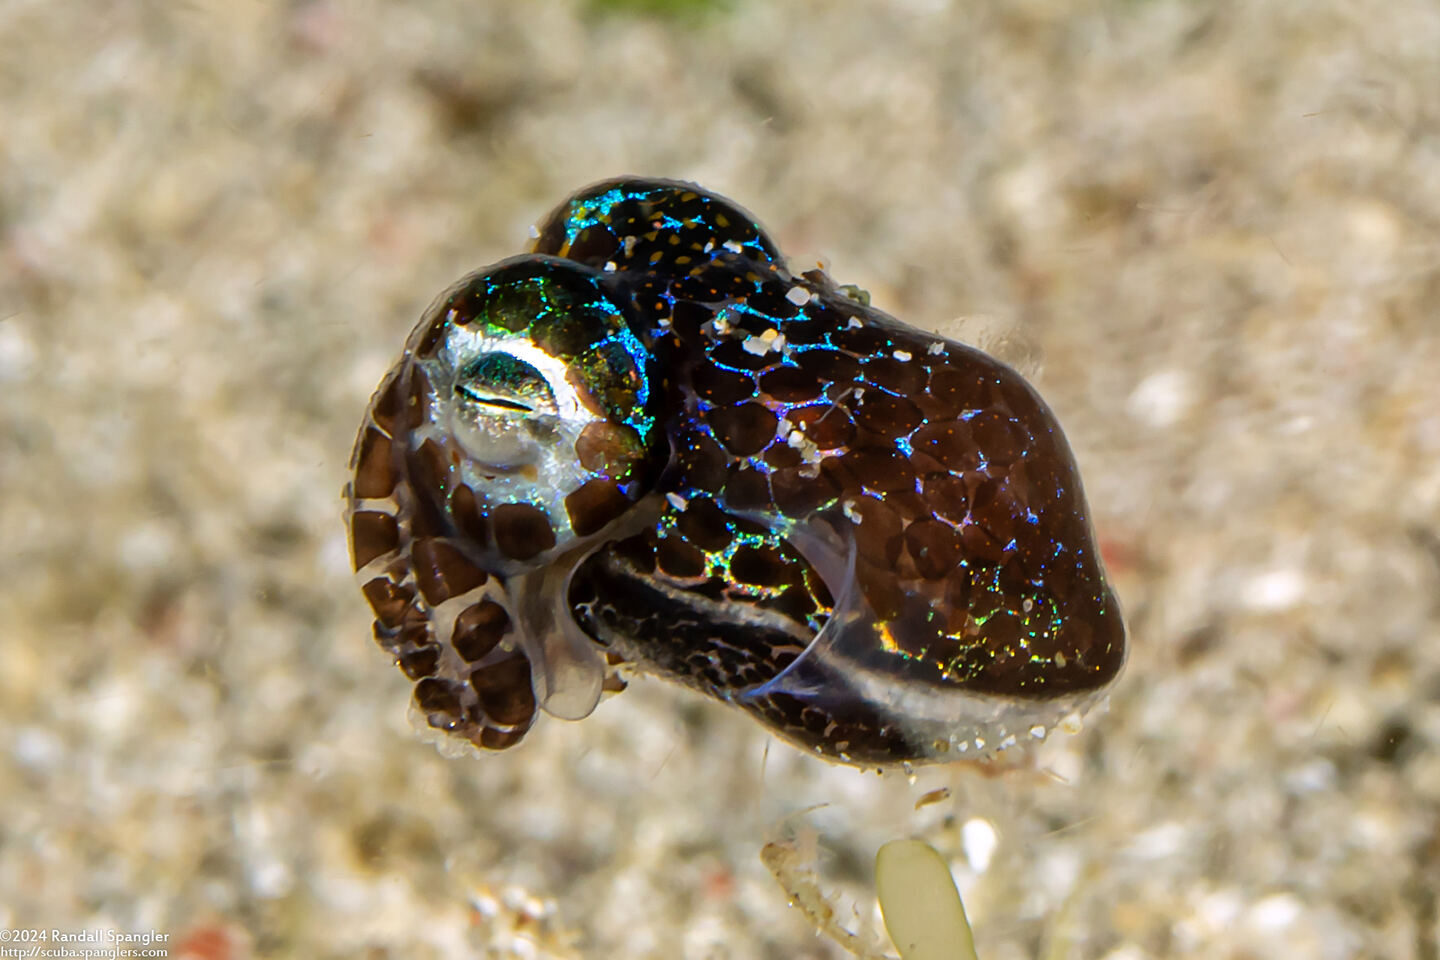 Euprymna berryi (Berry's Bobtail Squid)